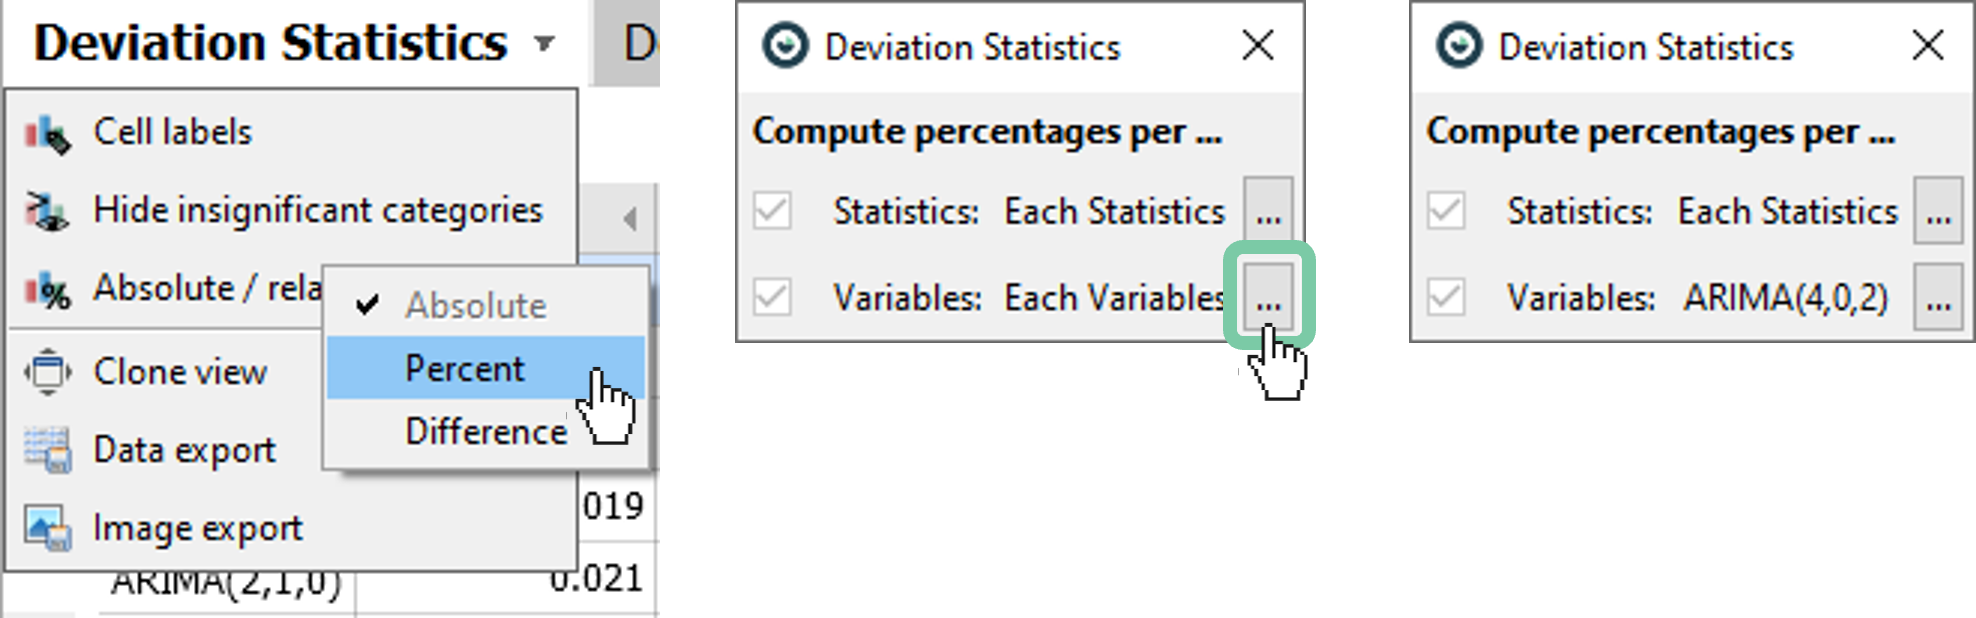 Deviation Statistics using Relative Levels